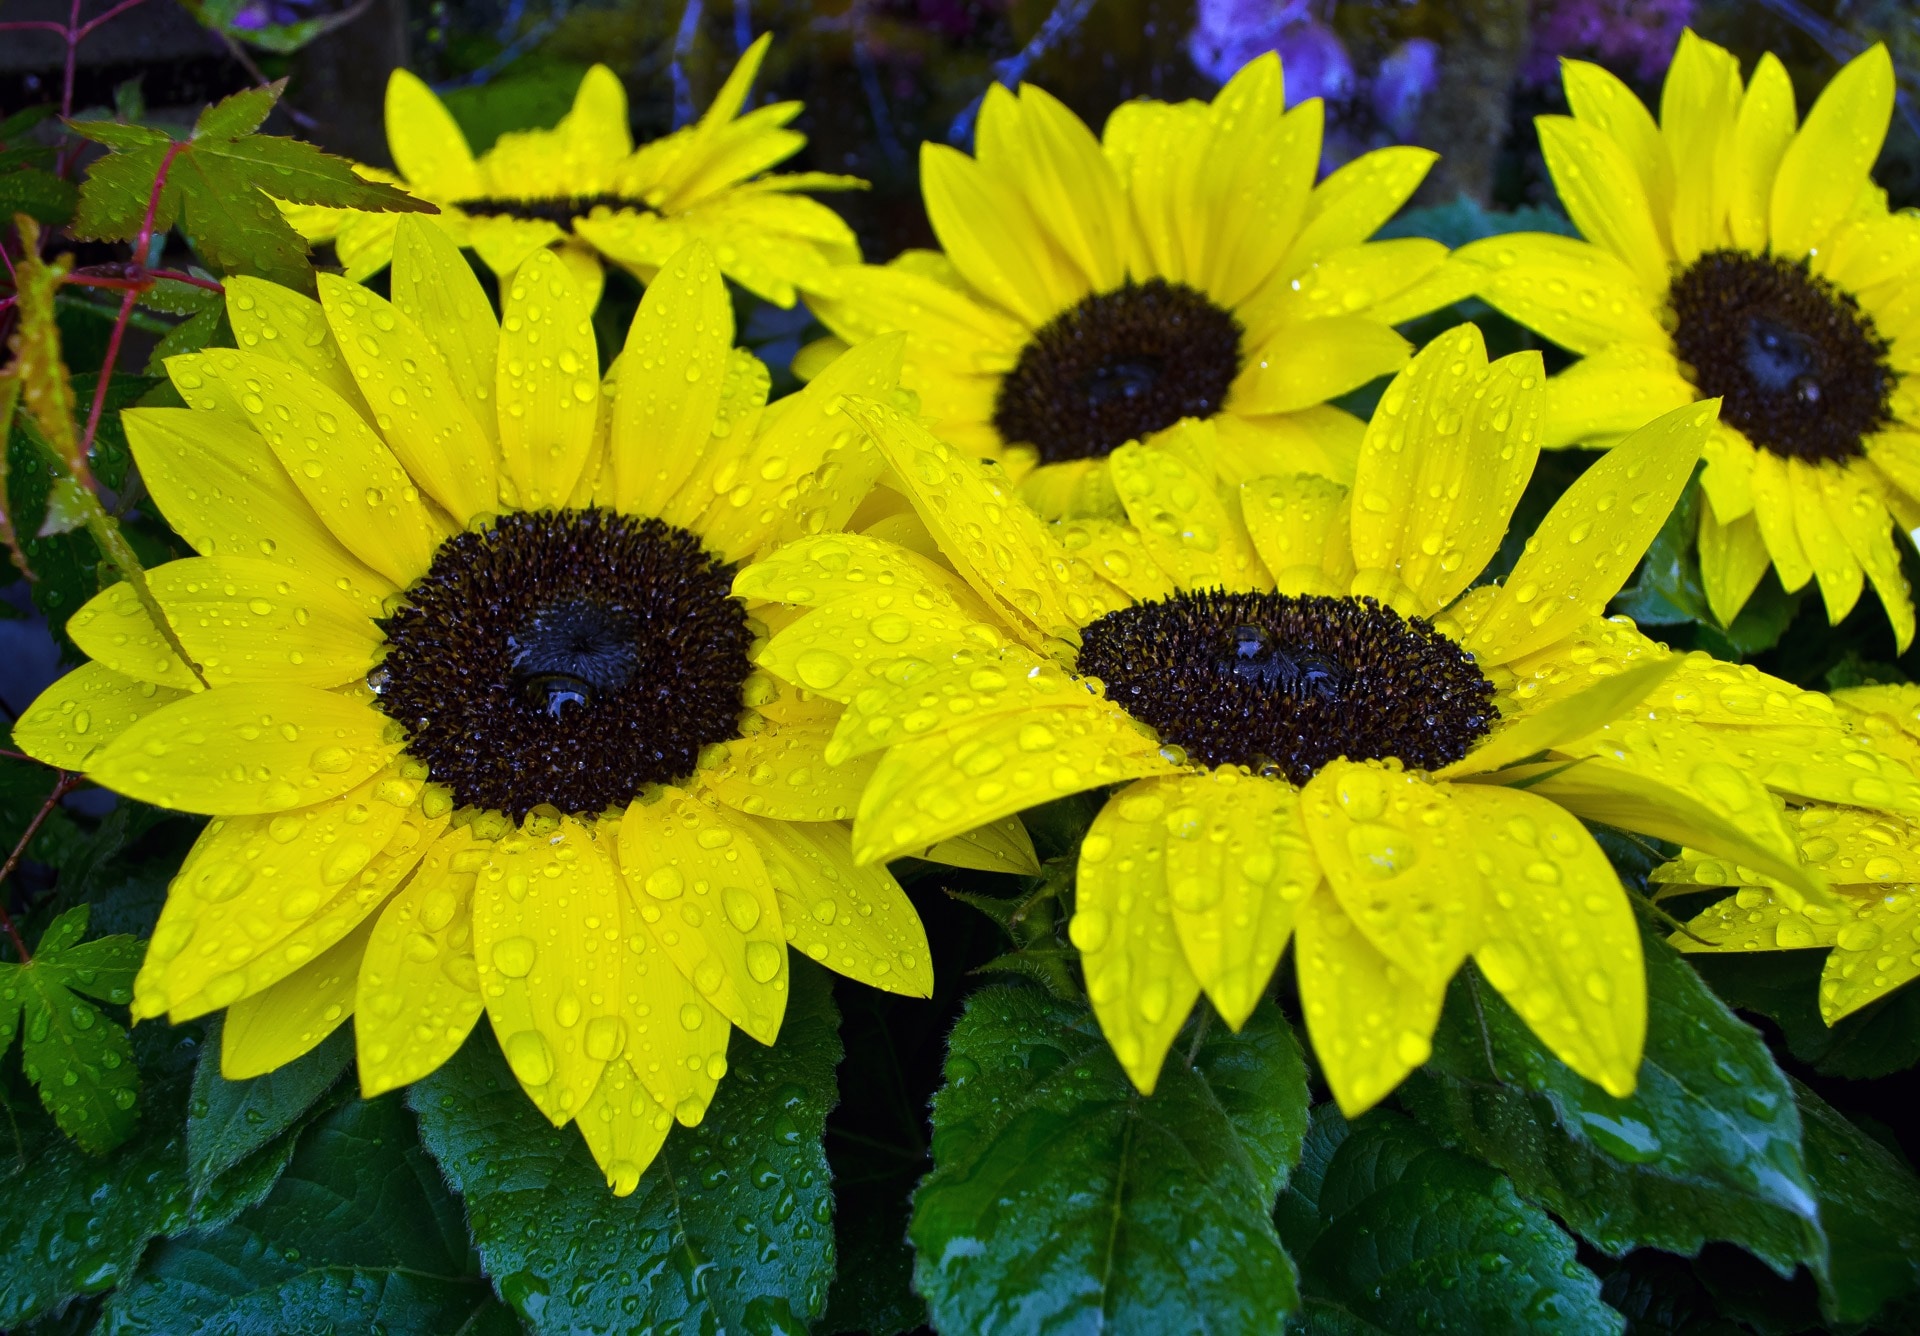 yellow-and-black sunflowers